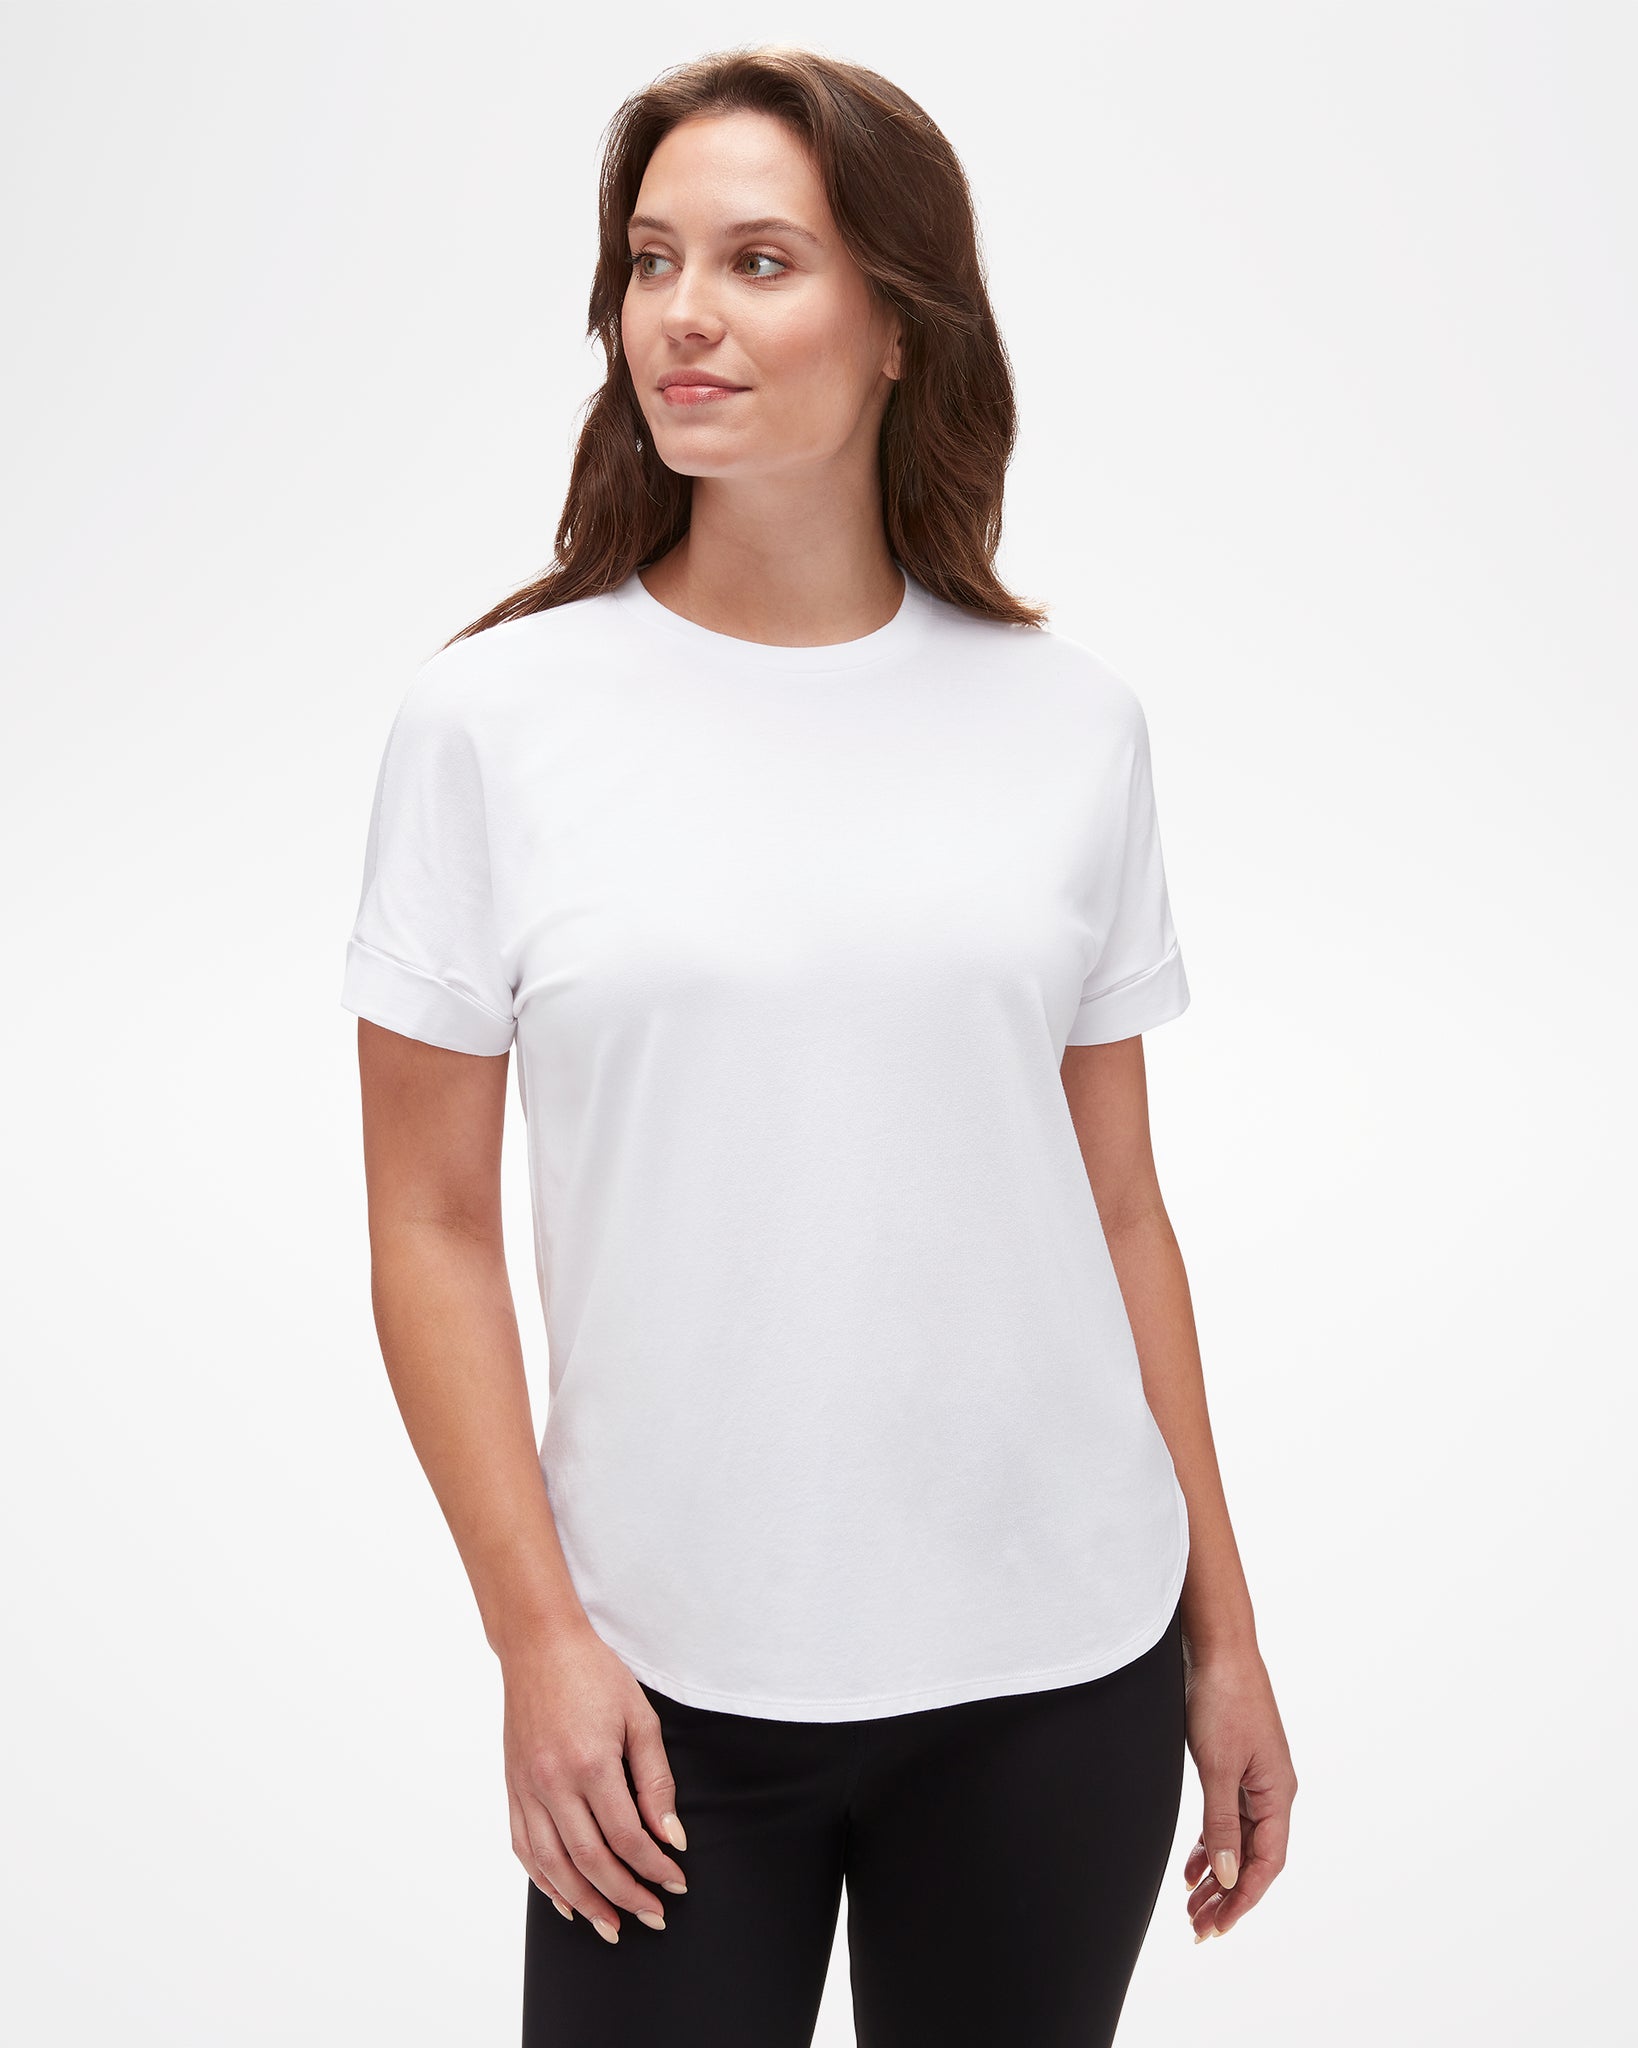 Women's Shirts | ASPENX Premium Apparel